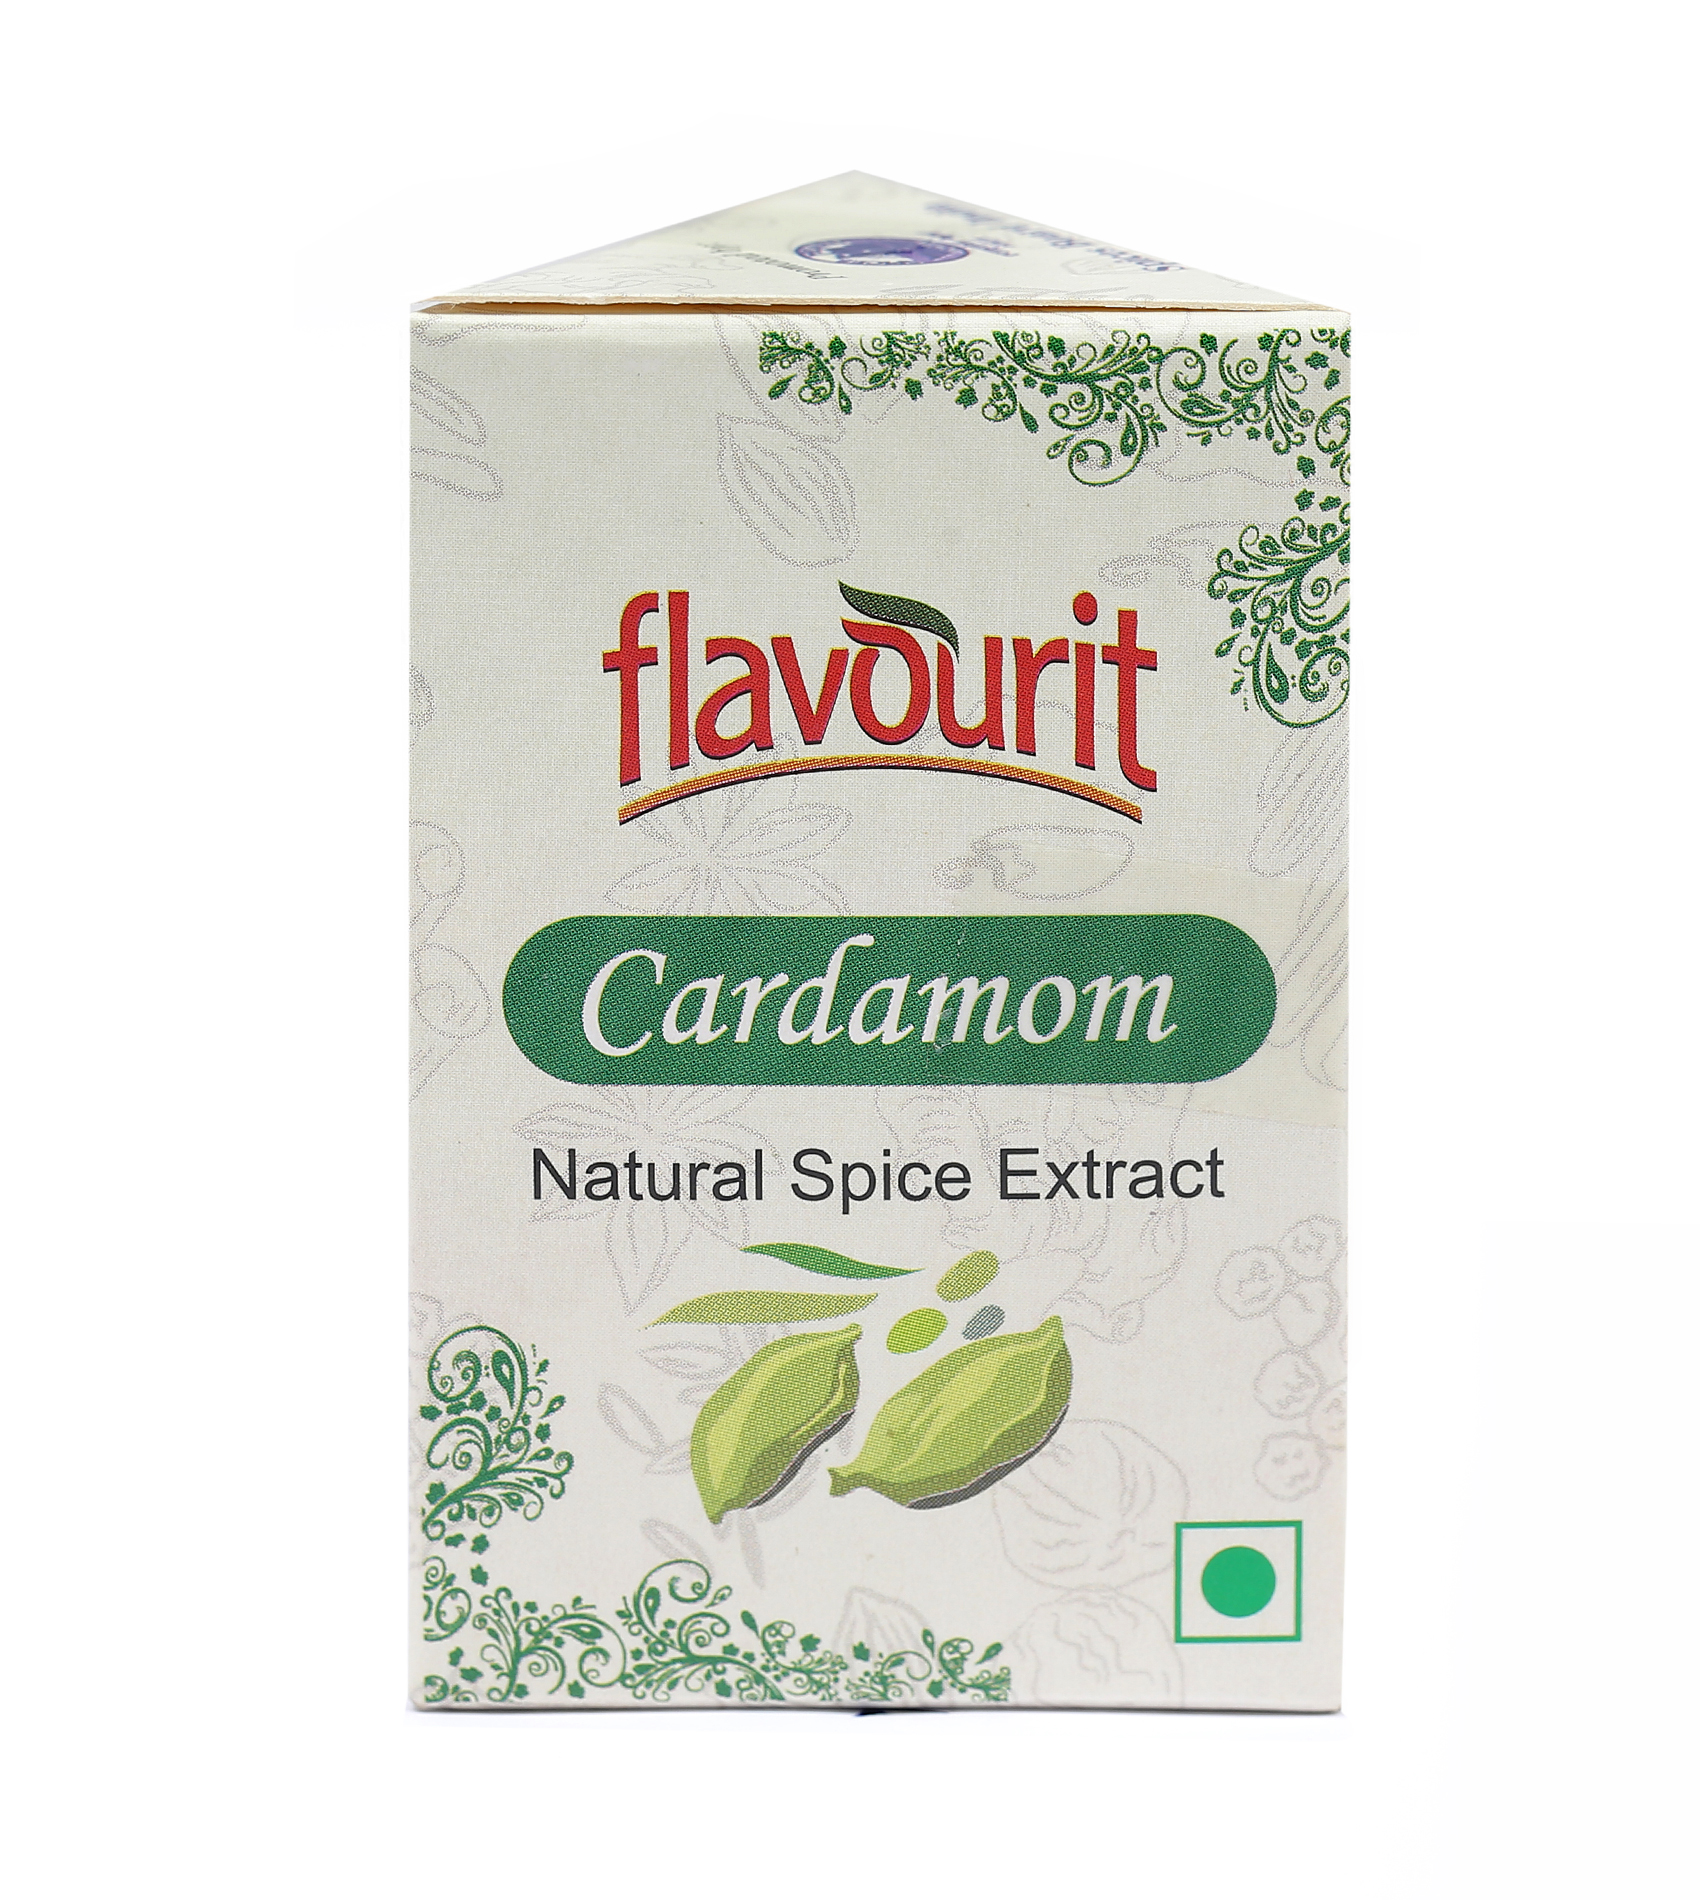 Flavourit Cardamom Extract